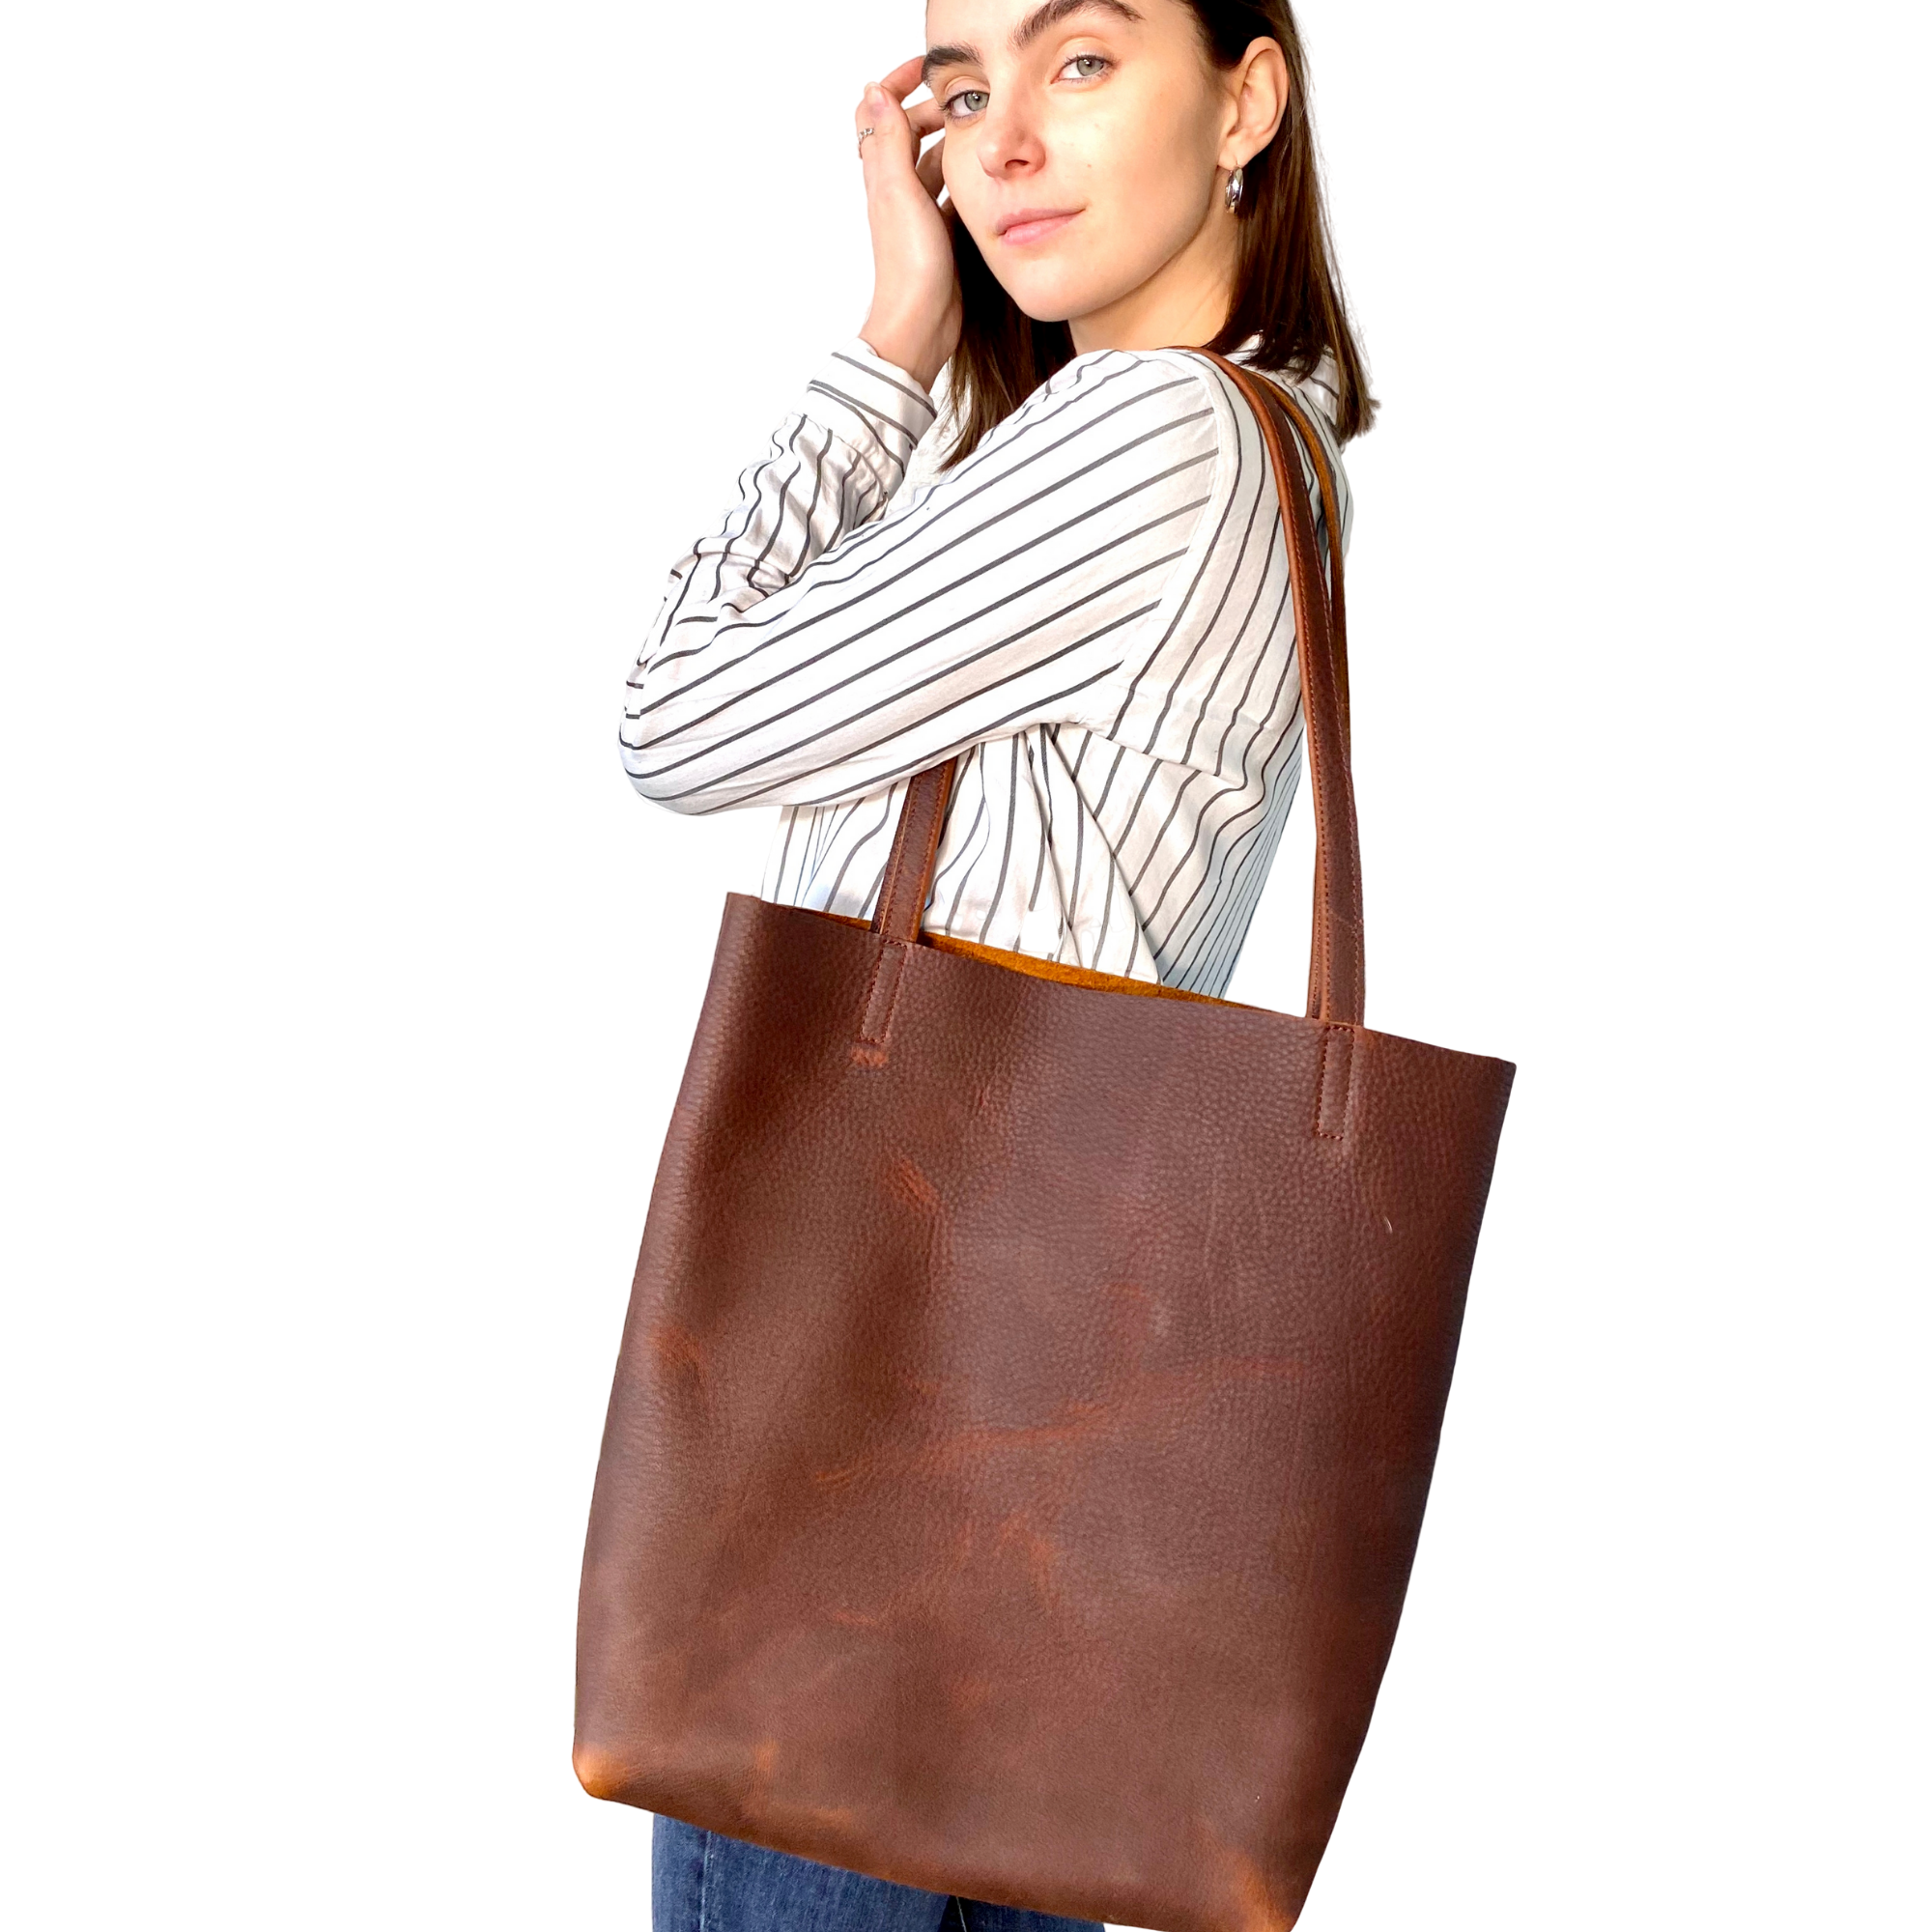 Tan Leather Big Crossbody Bag. Soft Leather Simple Everyday 